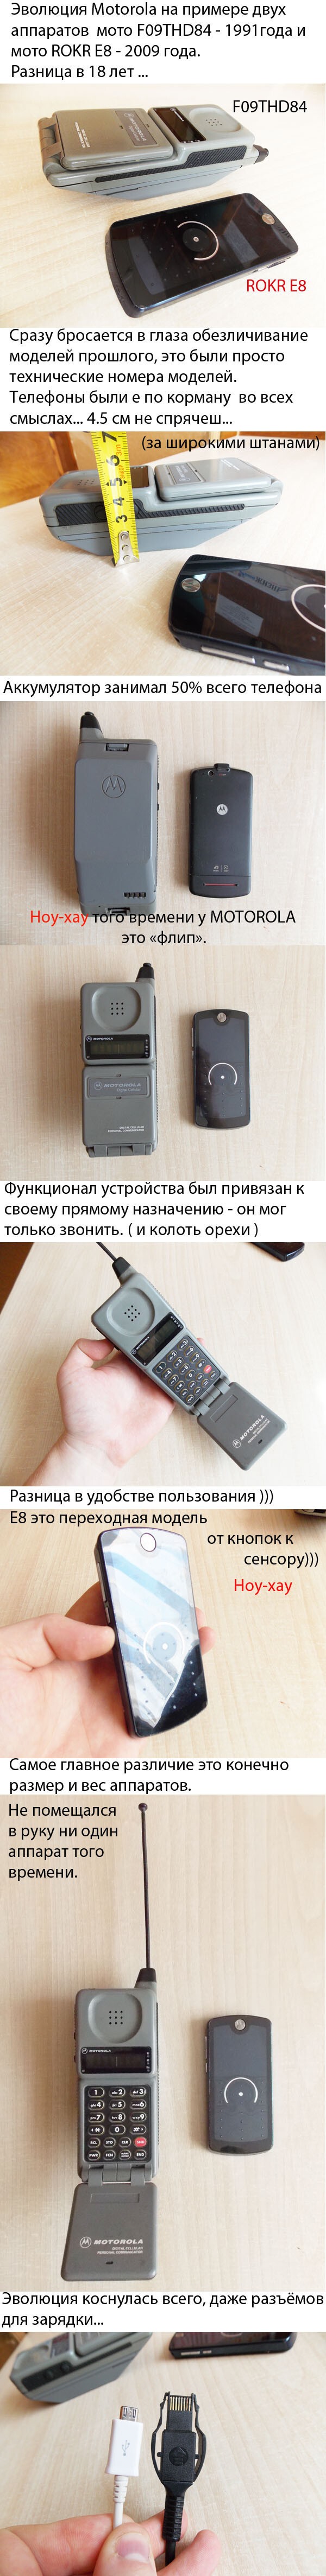 Моноблоки от Motorola тогда и сейчас